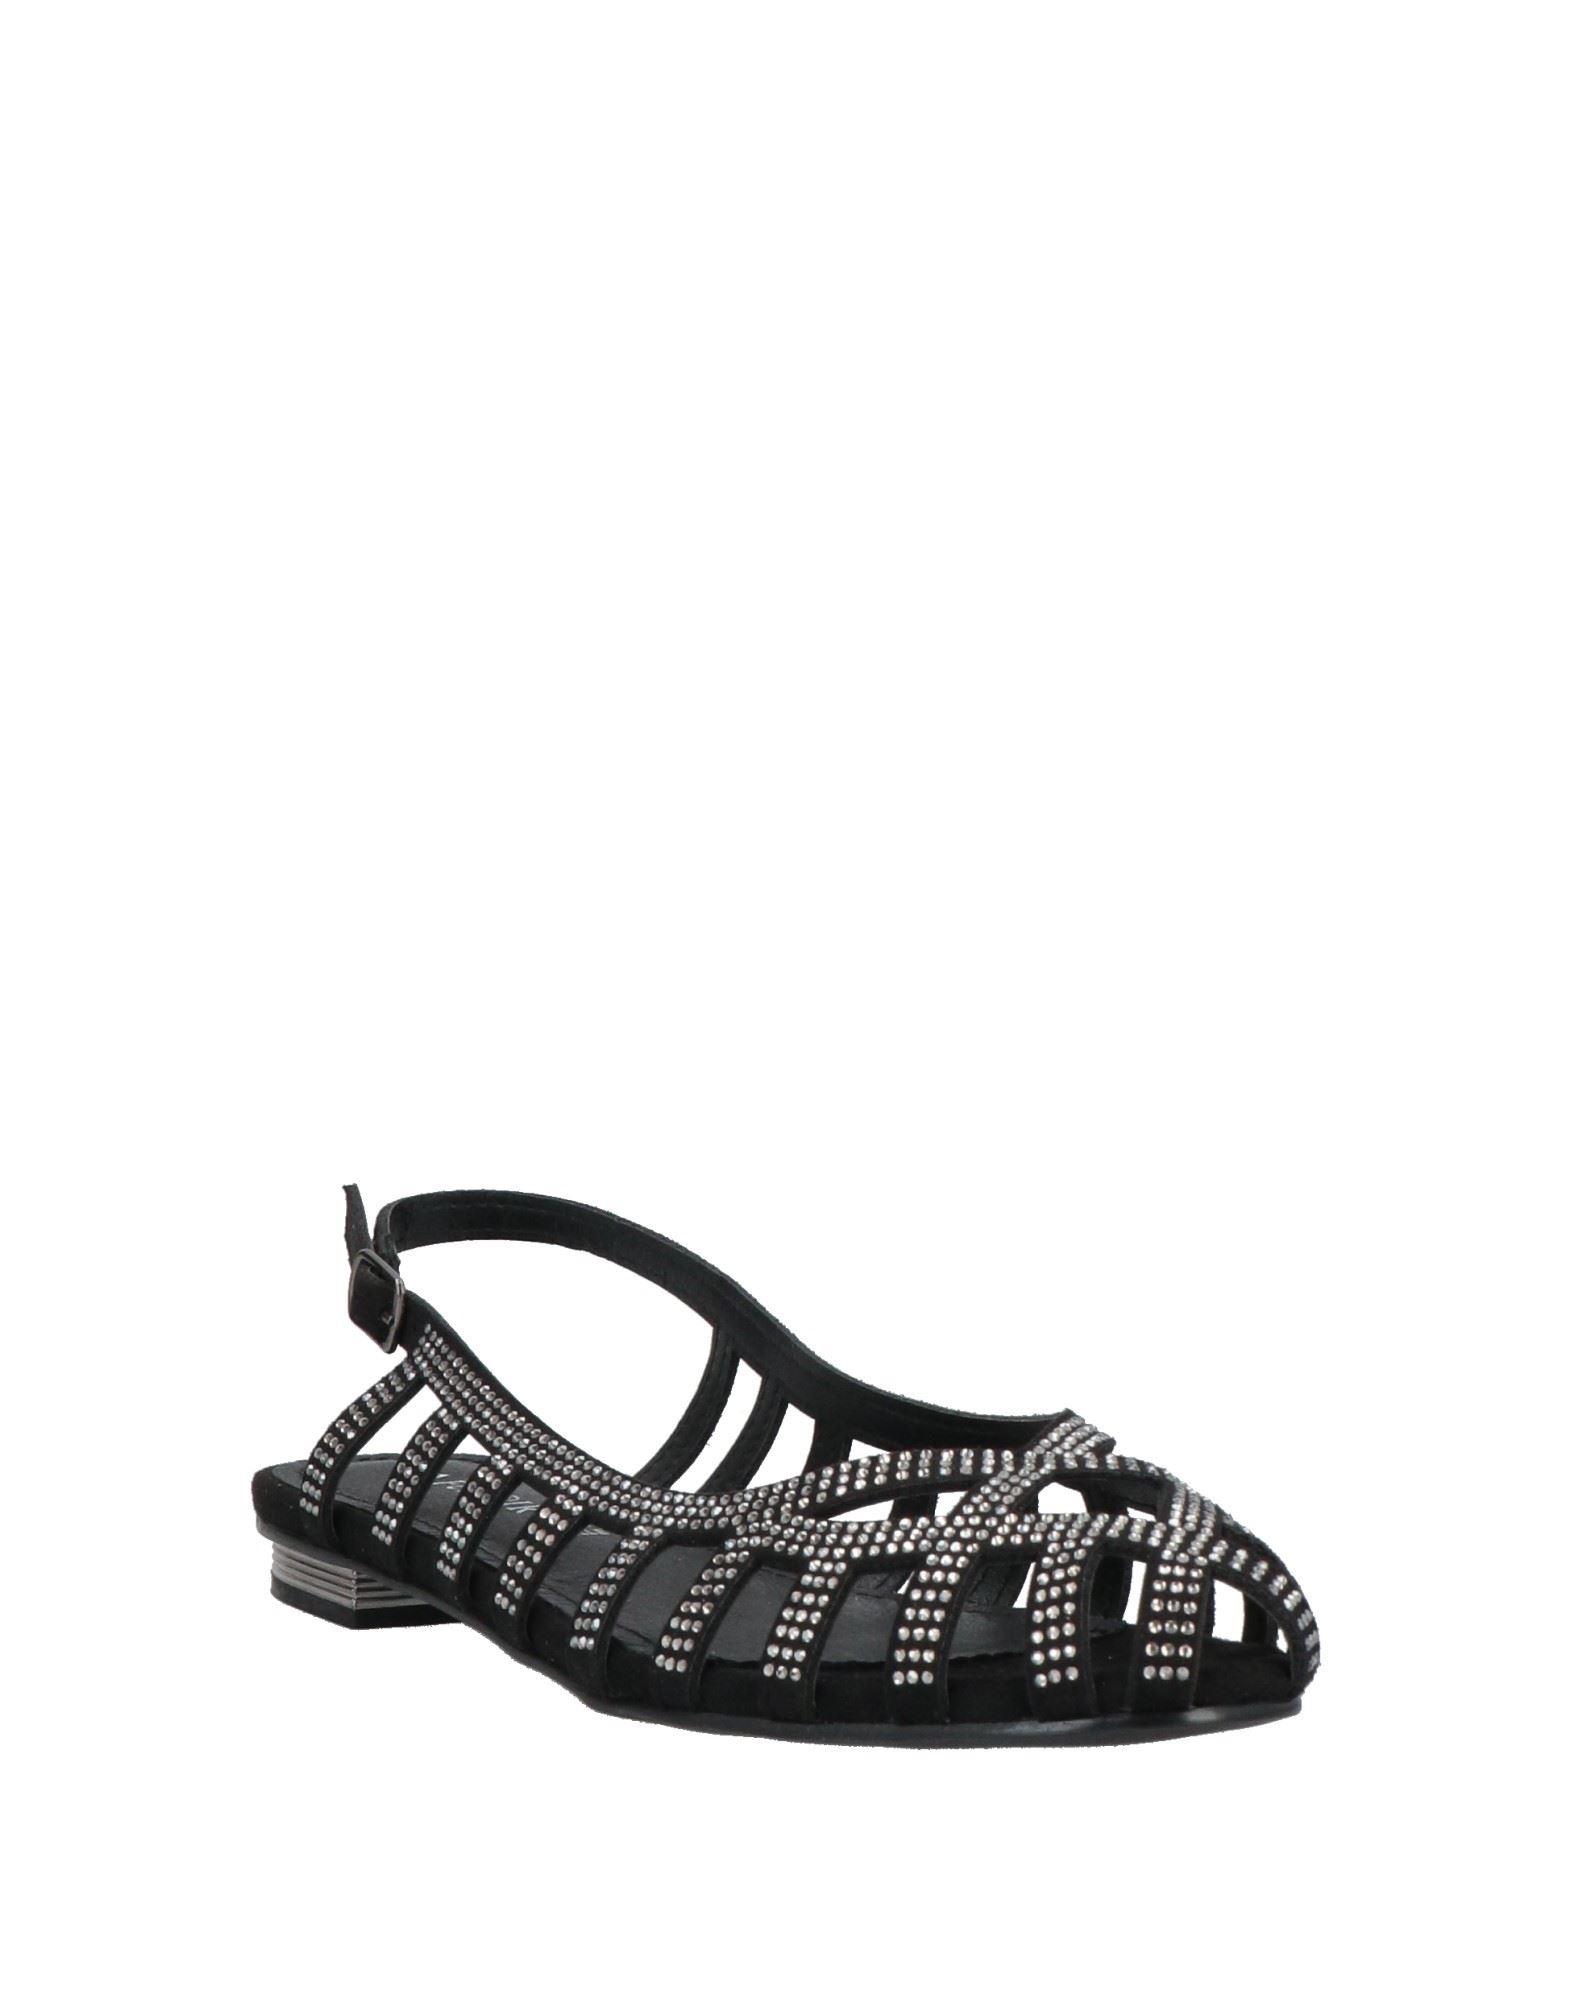 CafeNoir Sandals in Black | Lyst